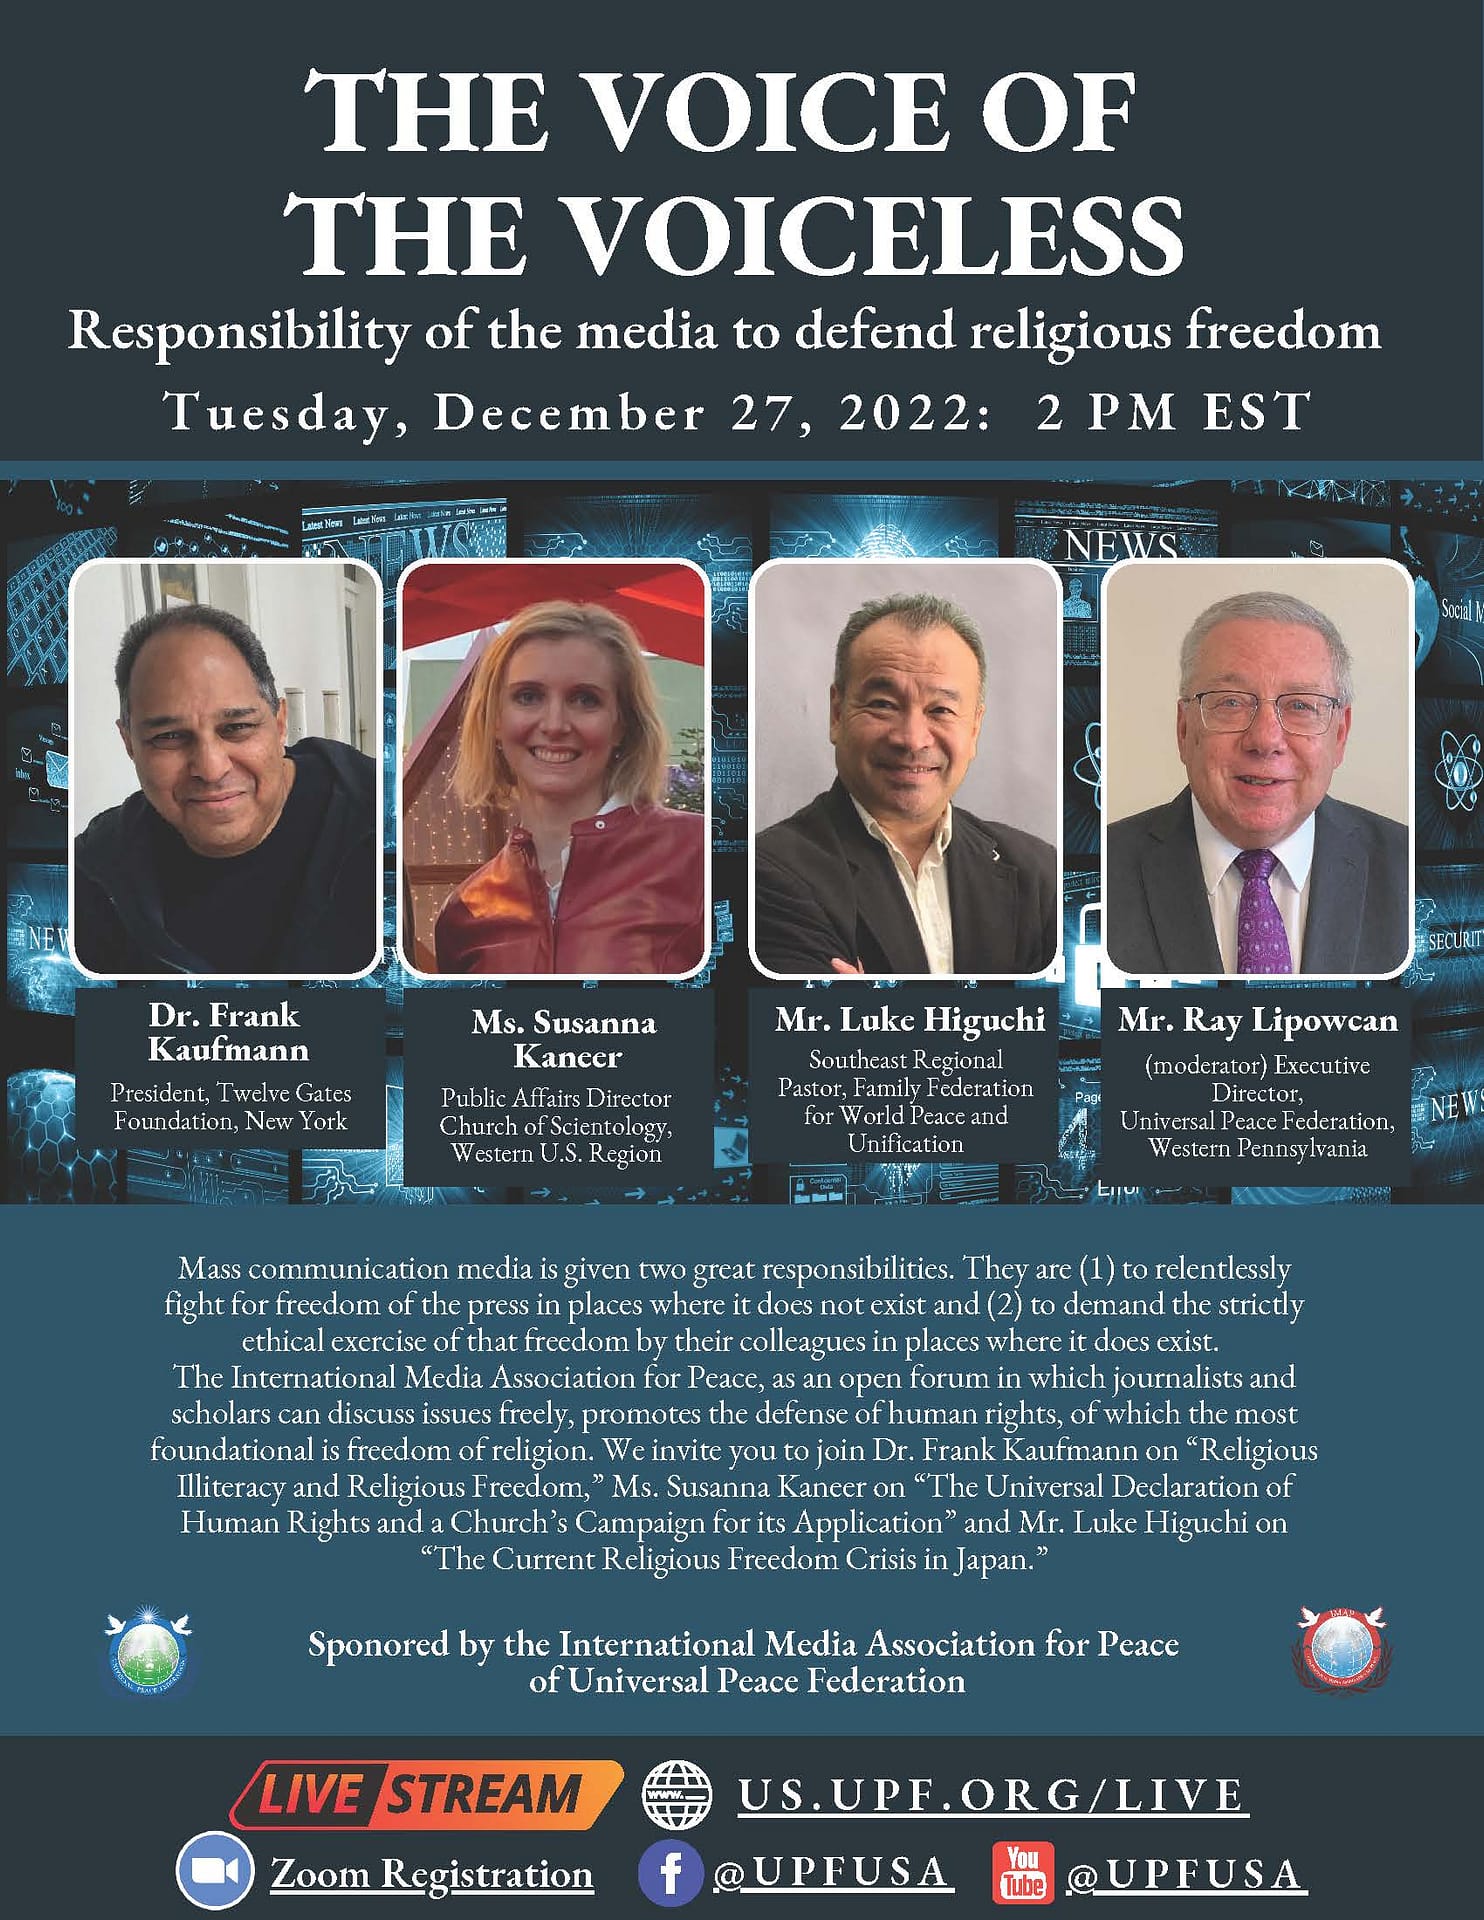 The Voice of the Voiceless: Twelve Gates Foundation President Speaks on Religious Freedom